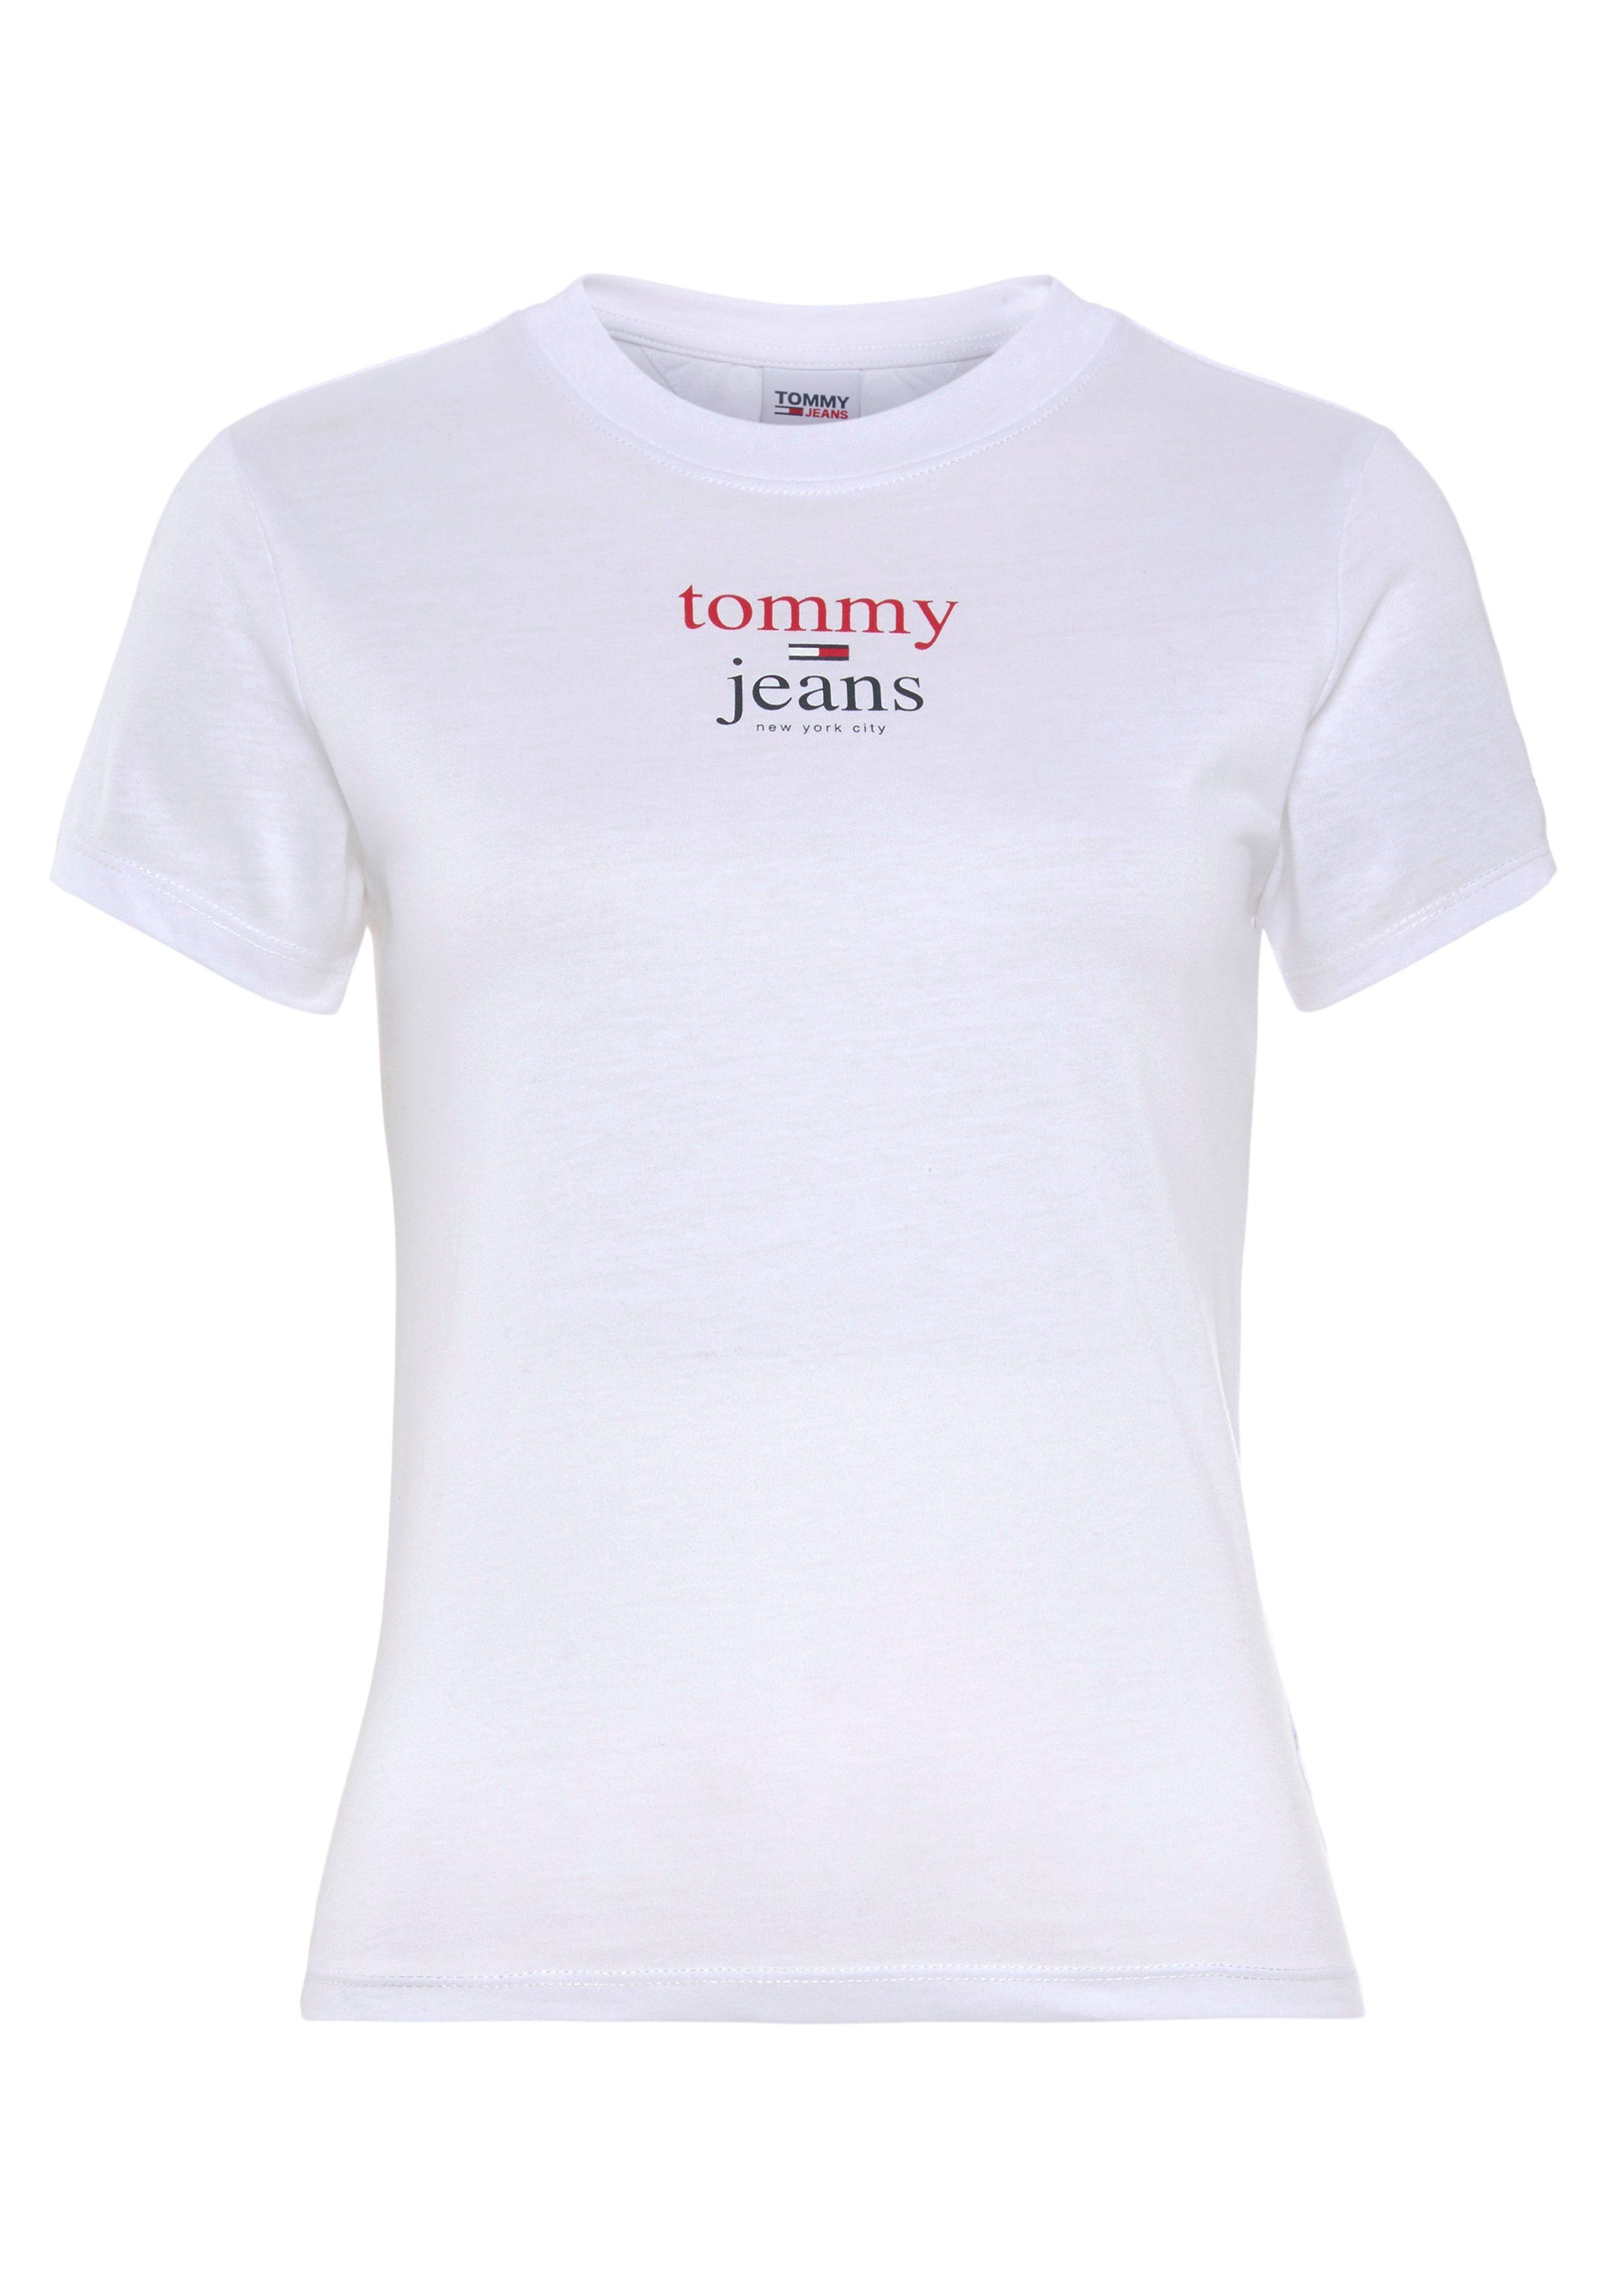 Tommy Jeans im mit Jeans TJW Kurzarmshirt Schriftzug 2 SS White ESSENTIAL BABY Tommy LOGO Basic-Style